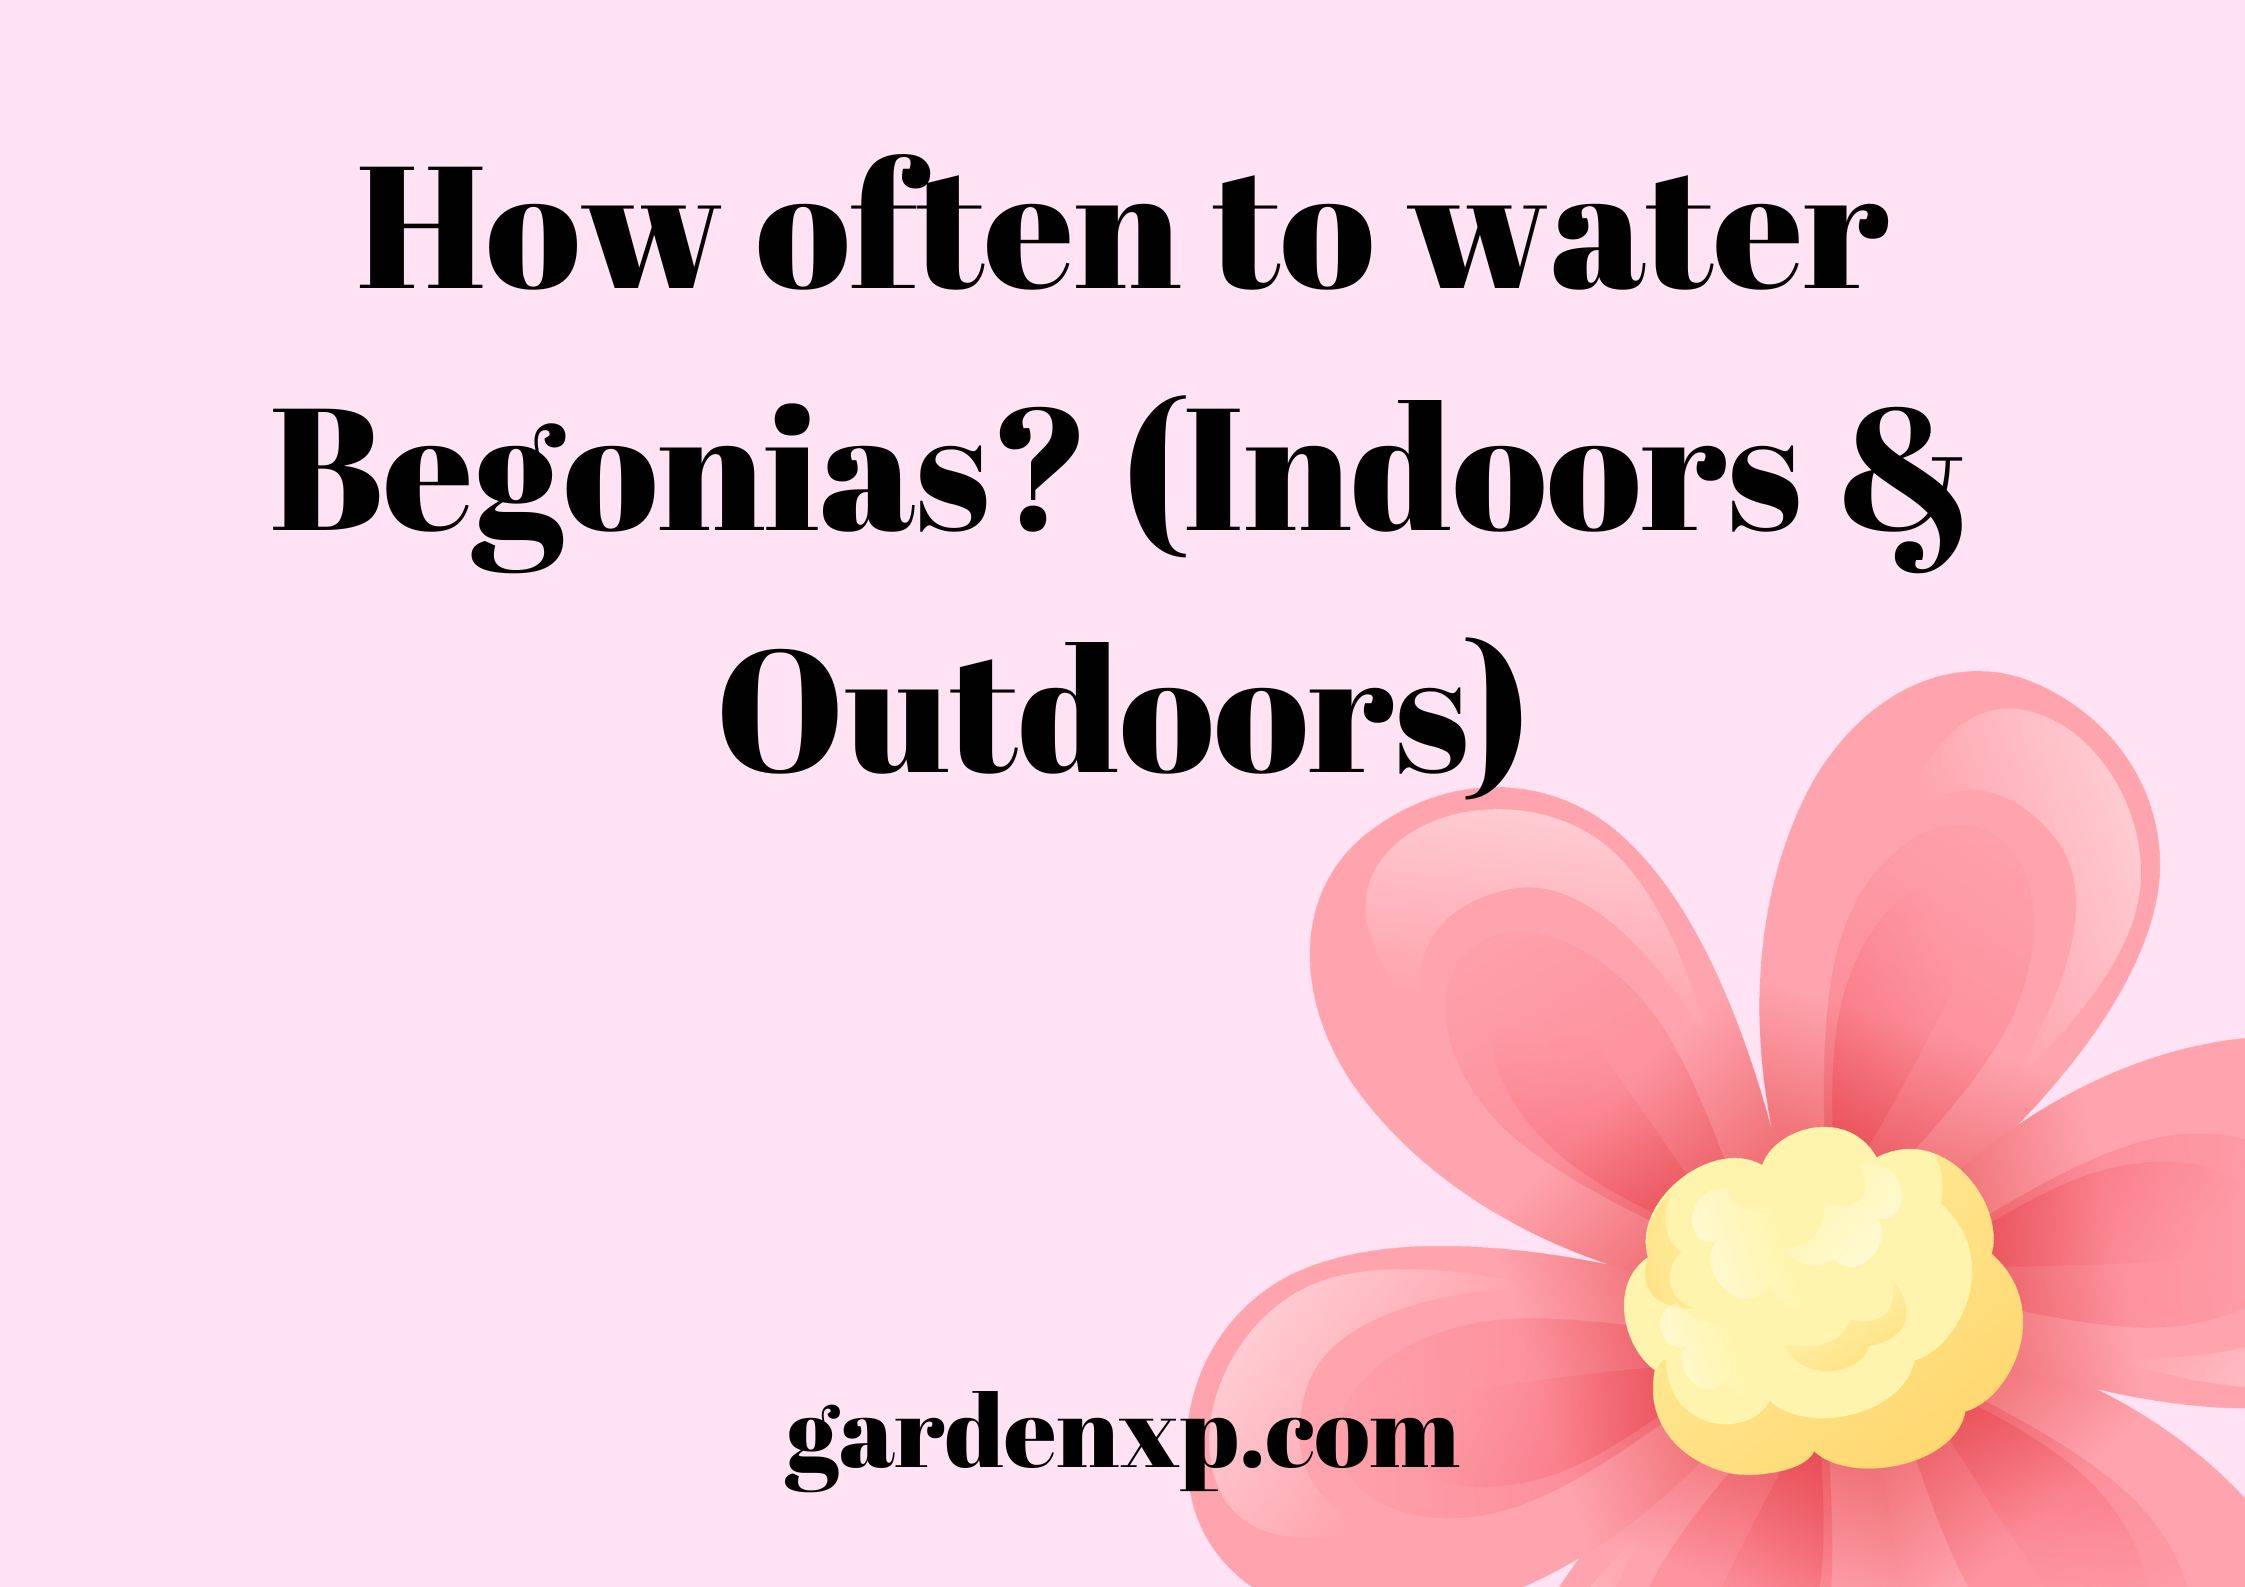 How often to water Begonias? (Indoors & Outdoors)